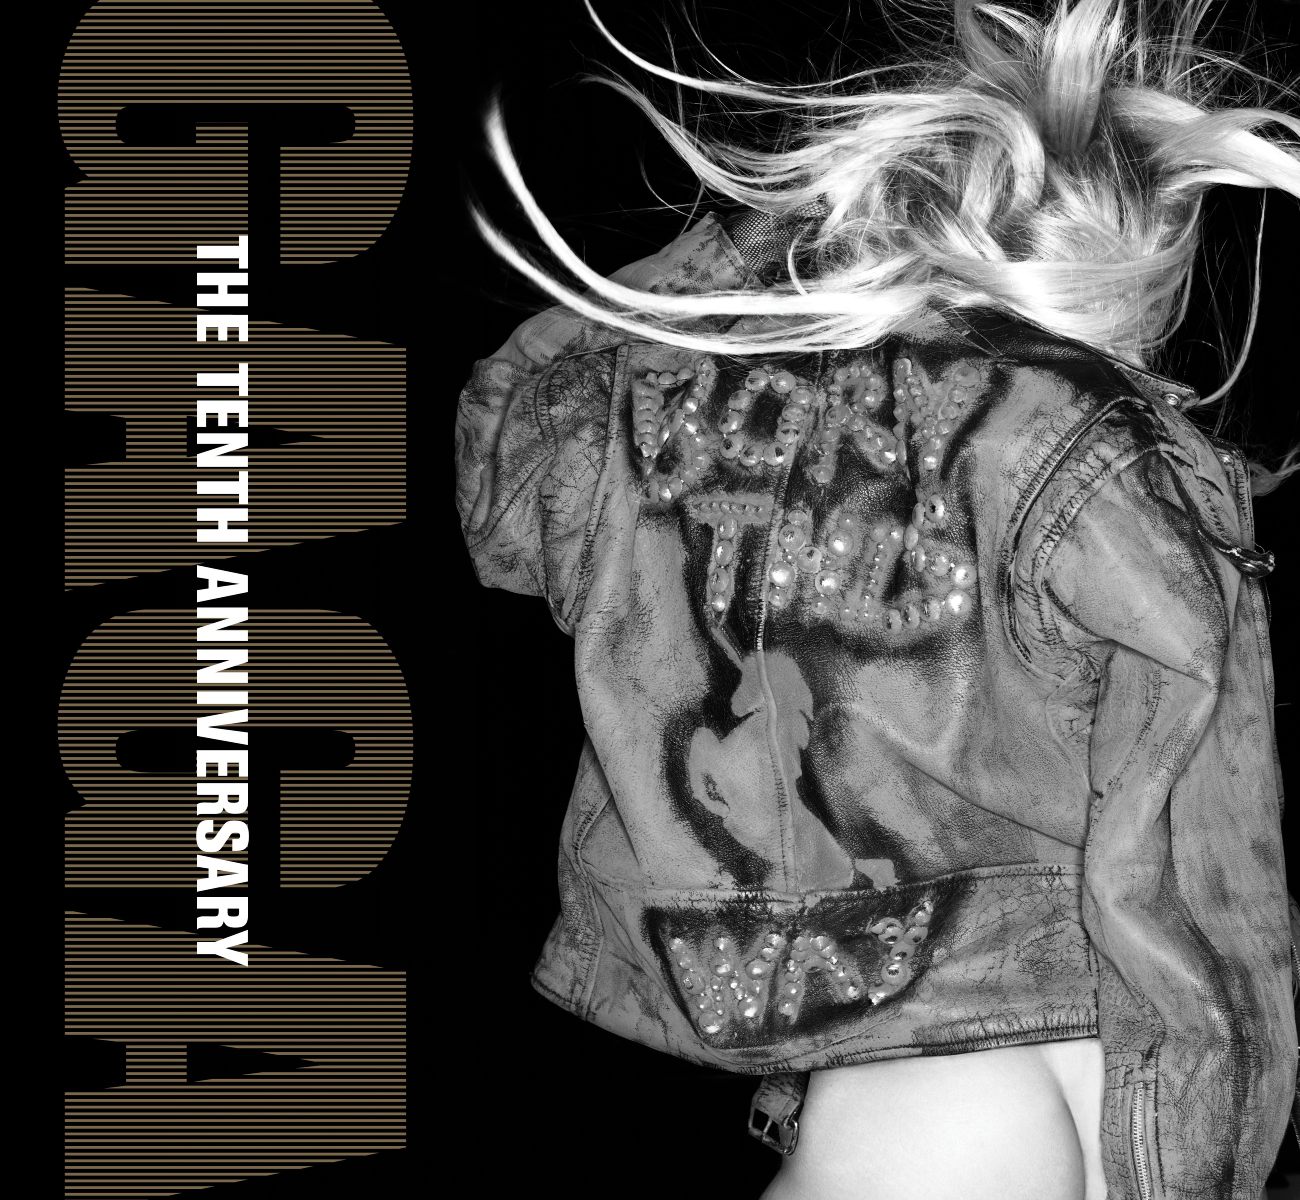 Lady Gaga - Born This Way Vinilo 10mo Aniversario 3LP – RepDiscosPeru